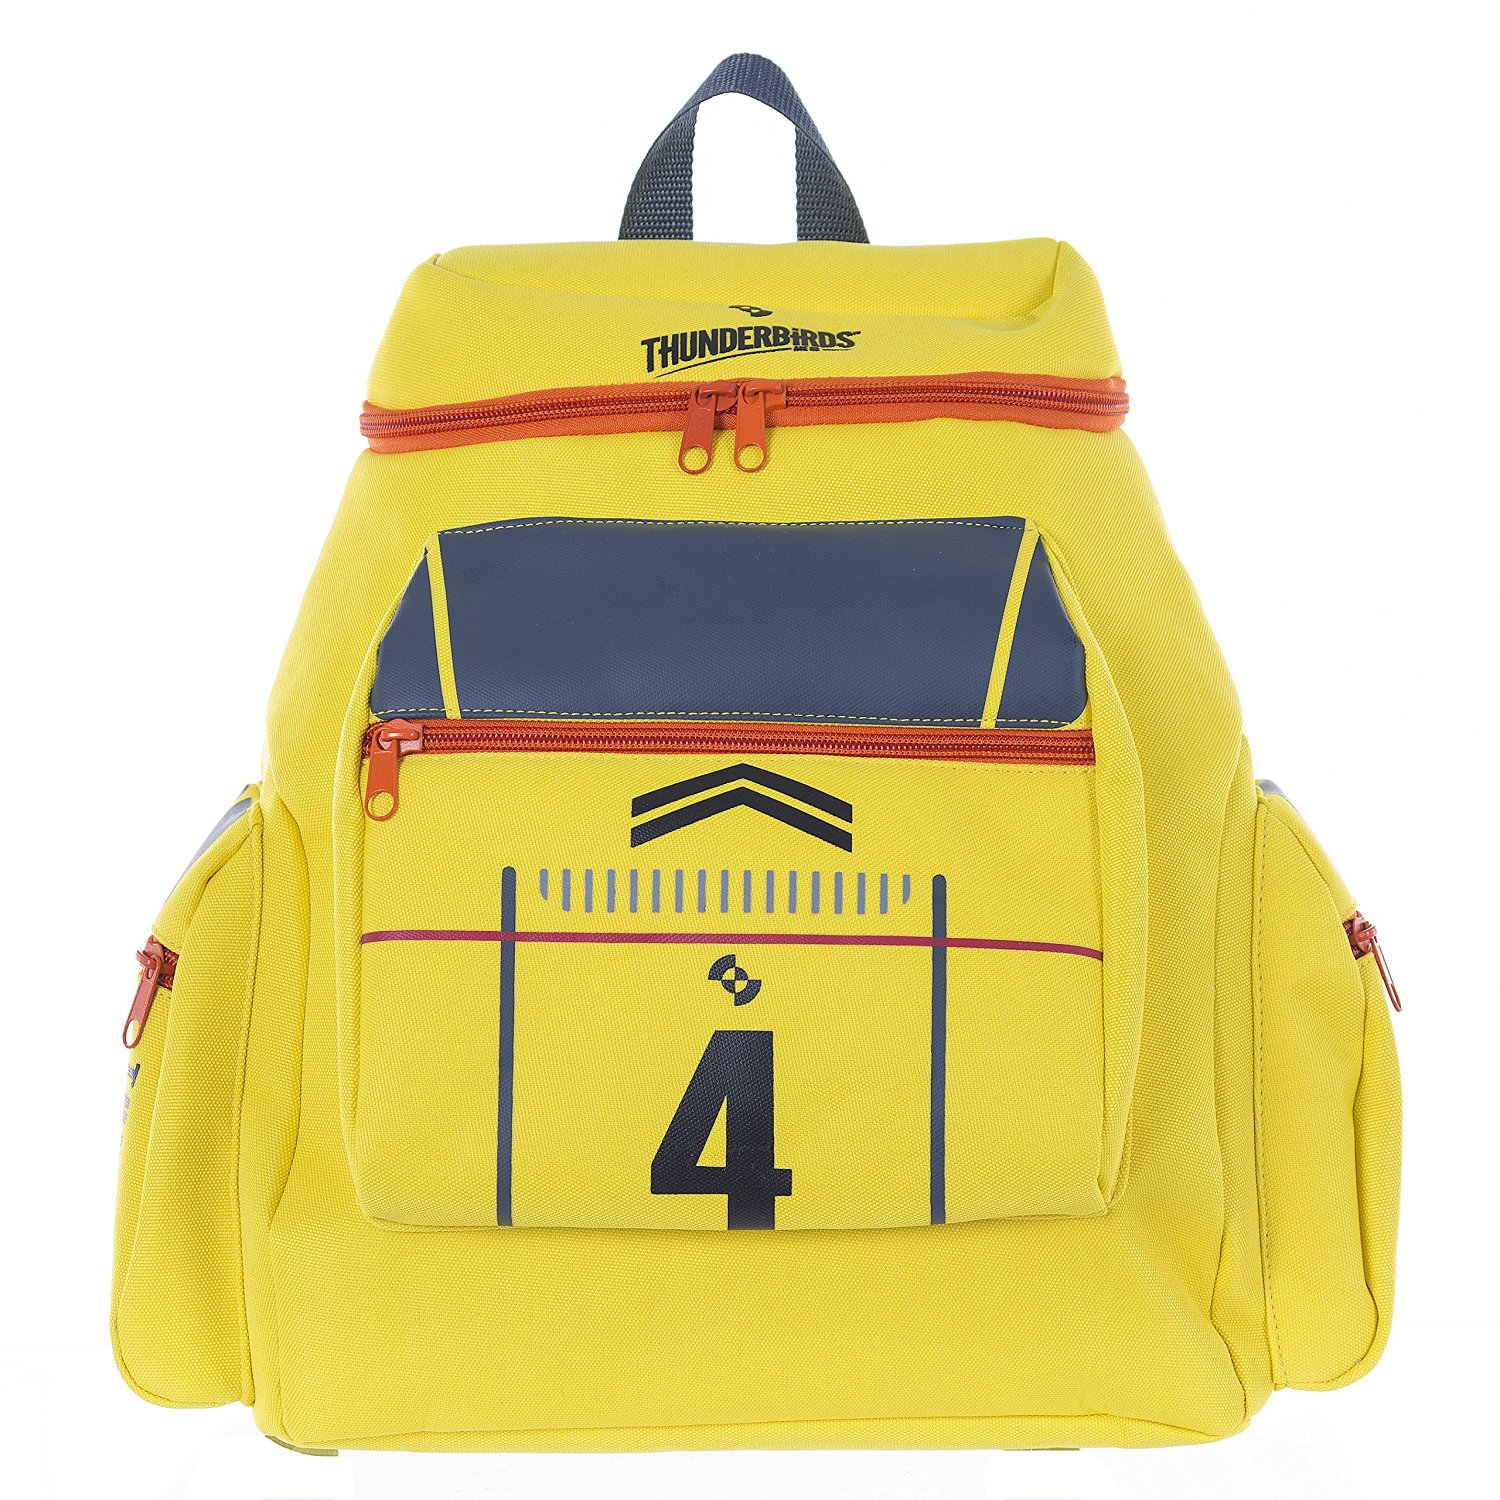 Thunderbirds 4 Rocket School Bag Rucksack Backpack